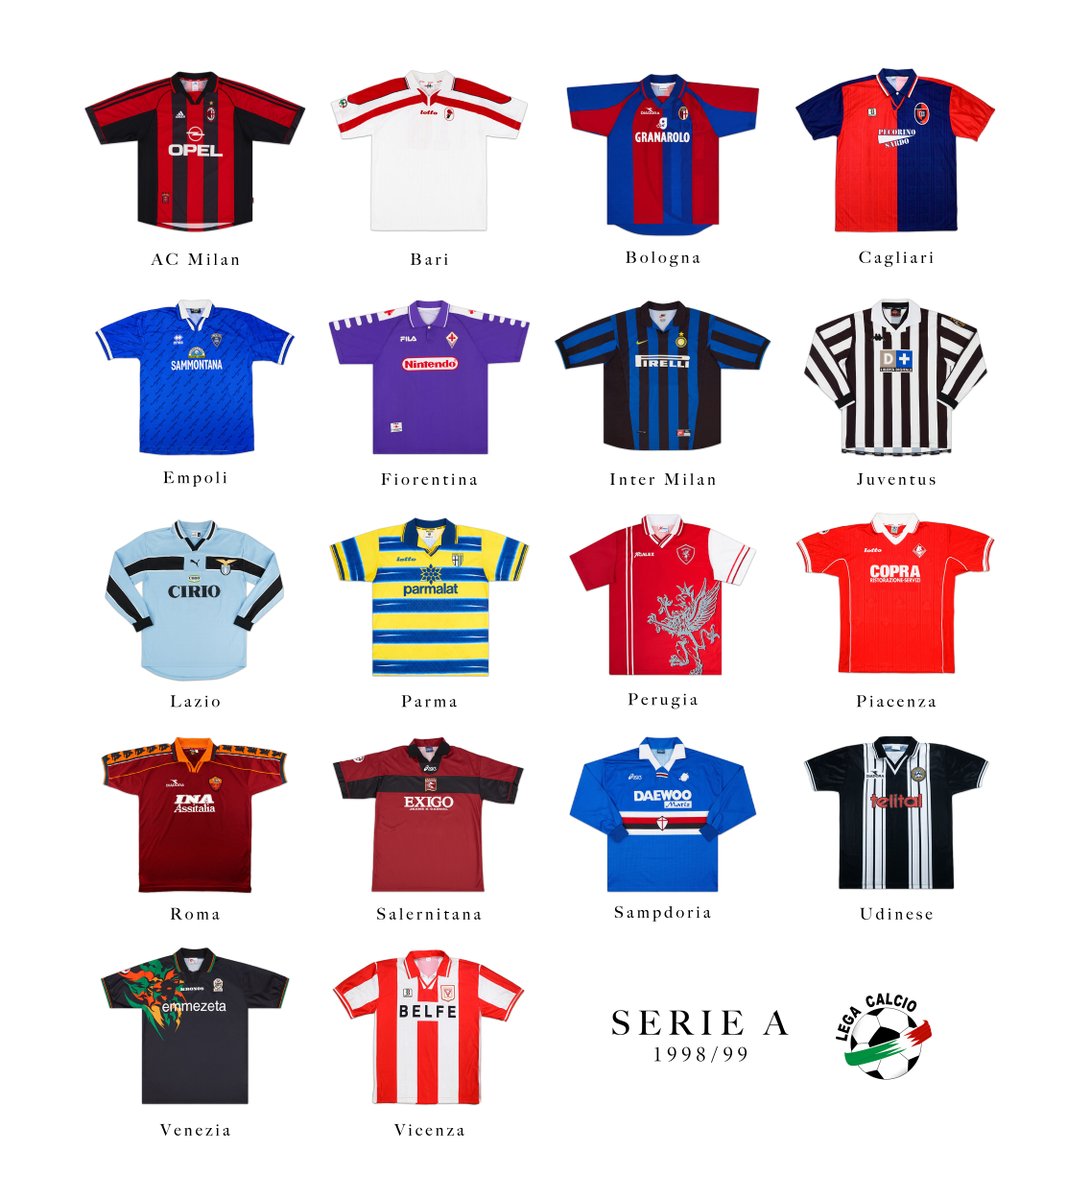 Cagliari Calcio Football Shirts - Club Football Shirts